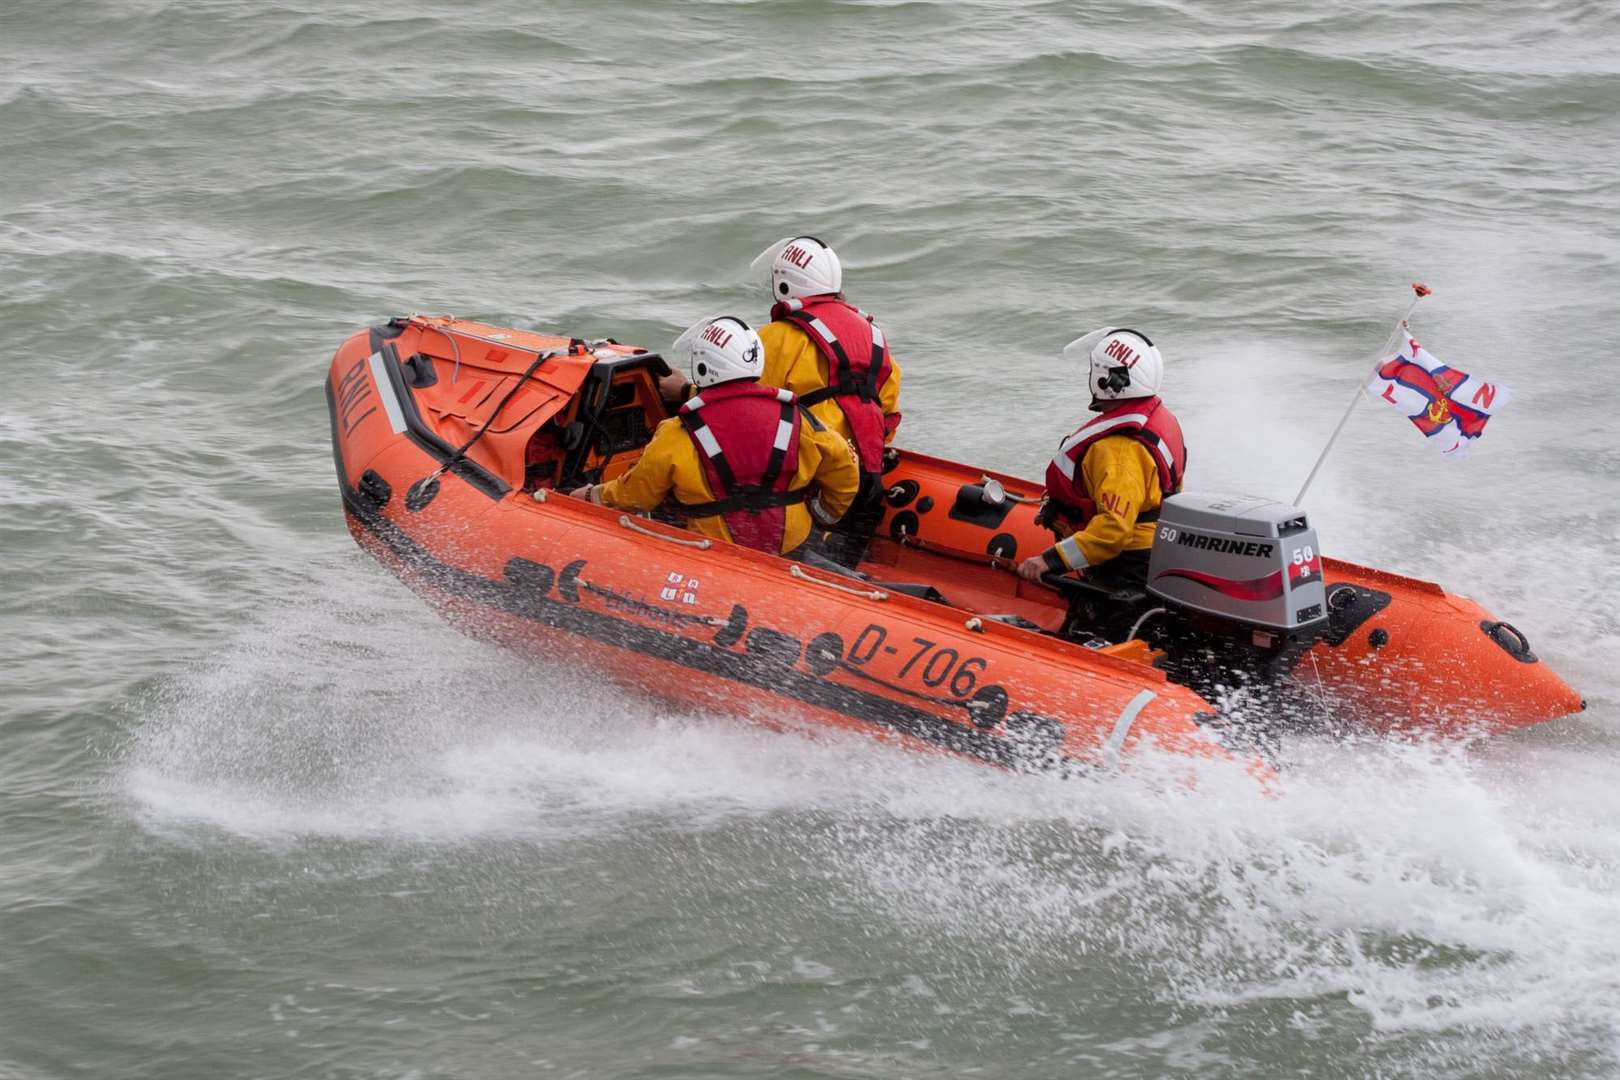 Margate RNLI inshore lifeboat. Stock image. Credit: RNLI Margate